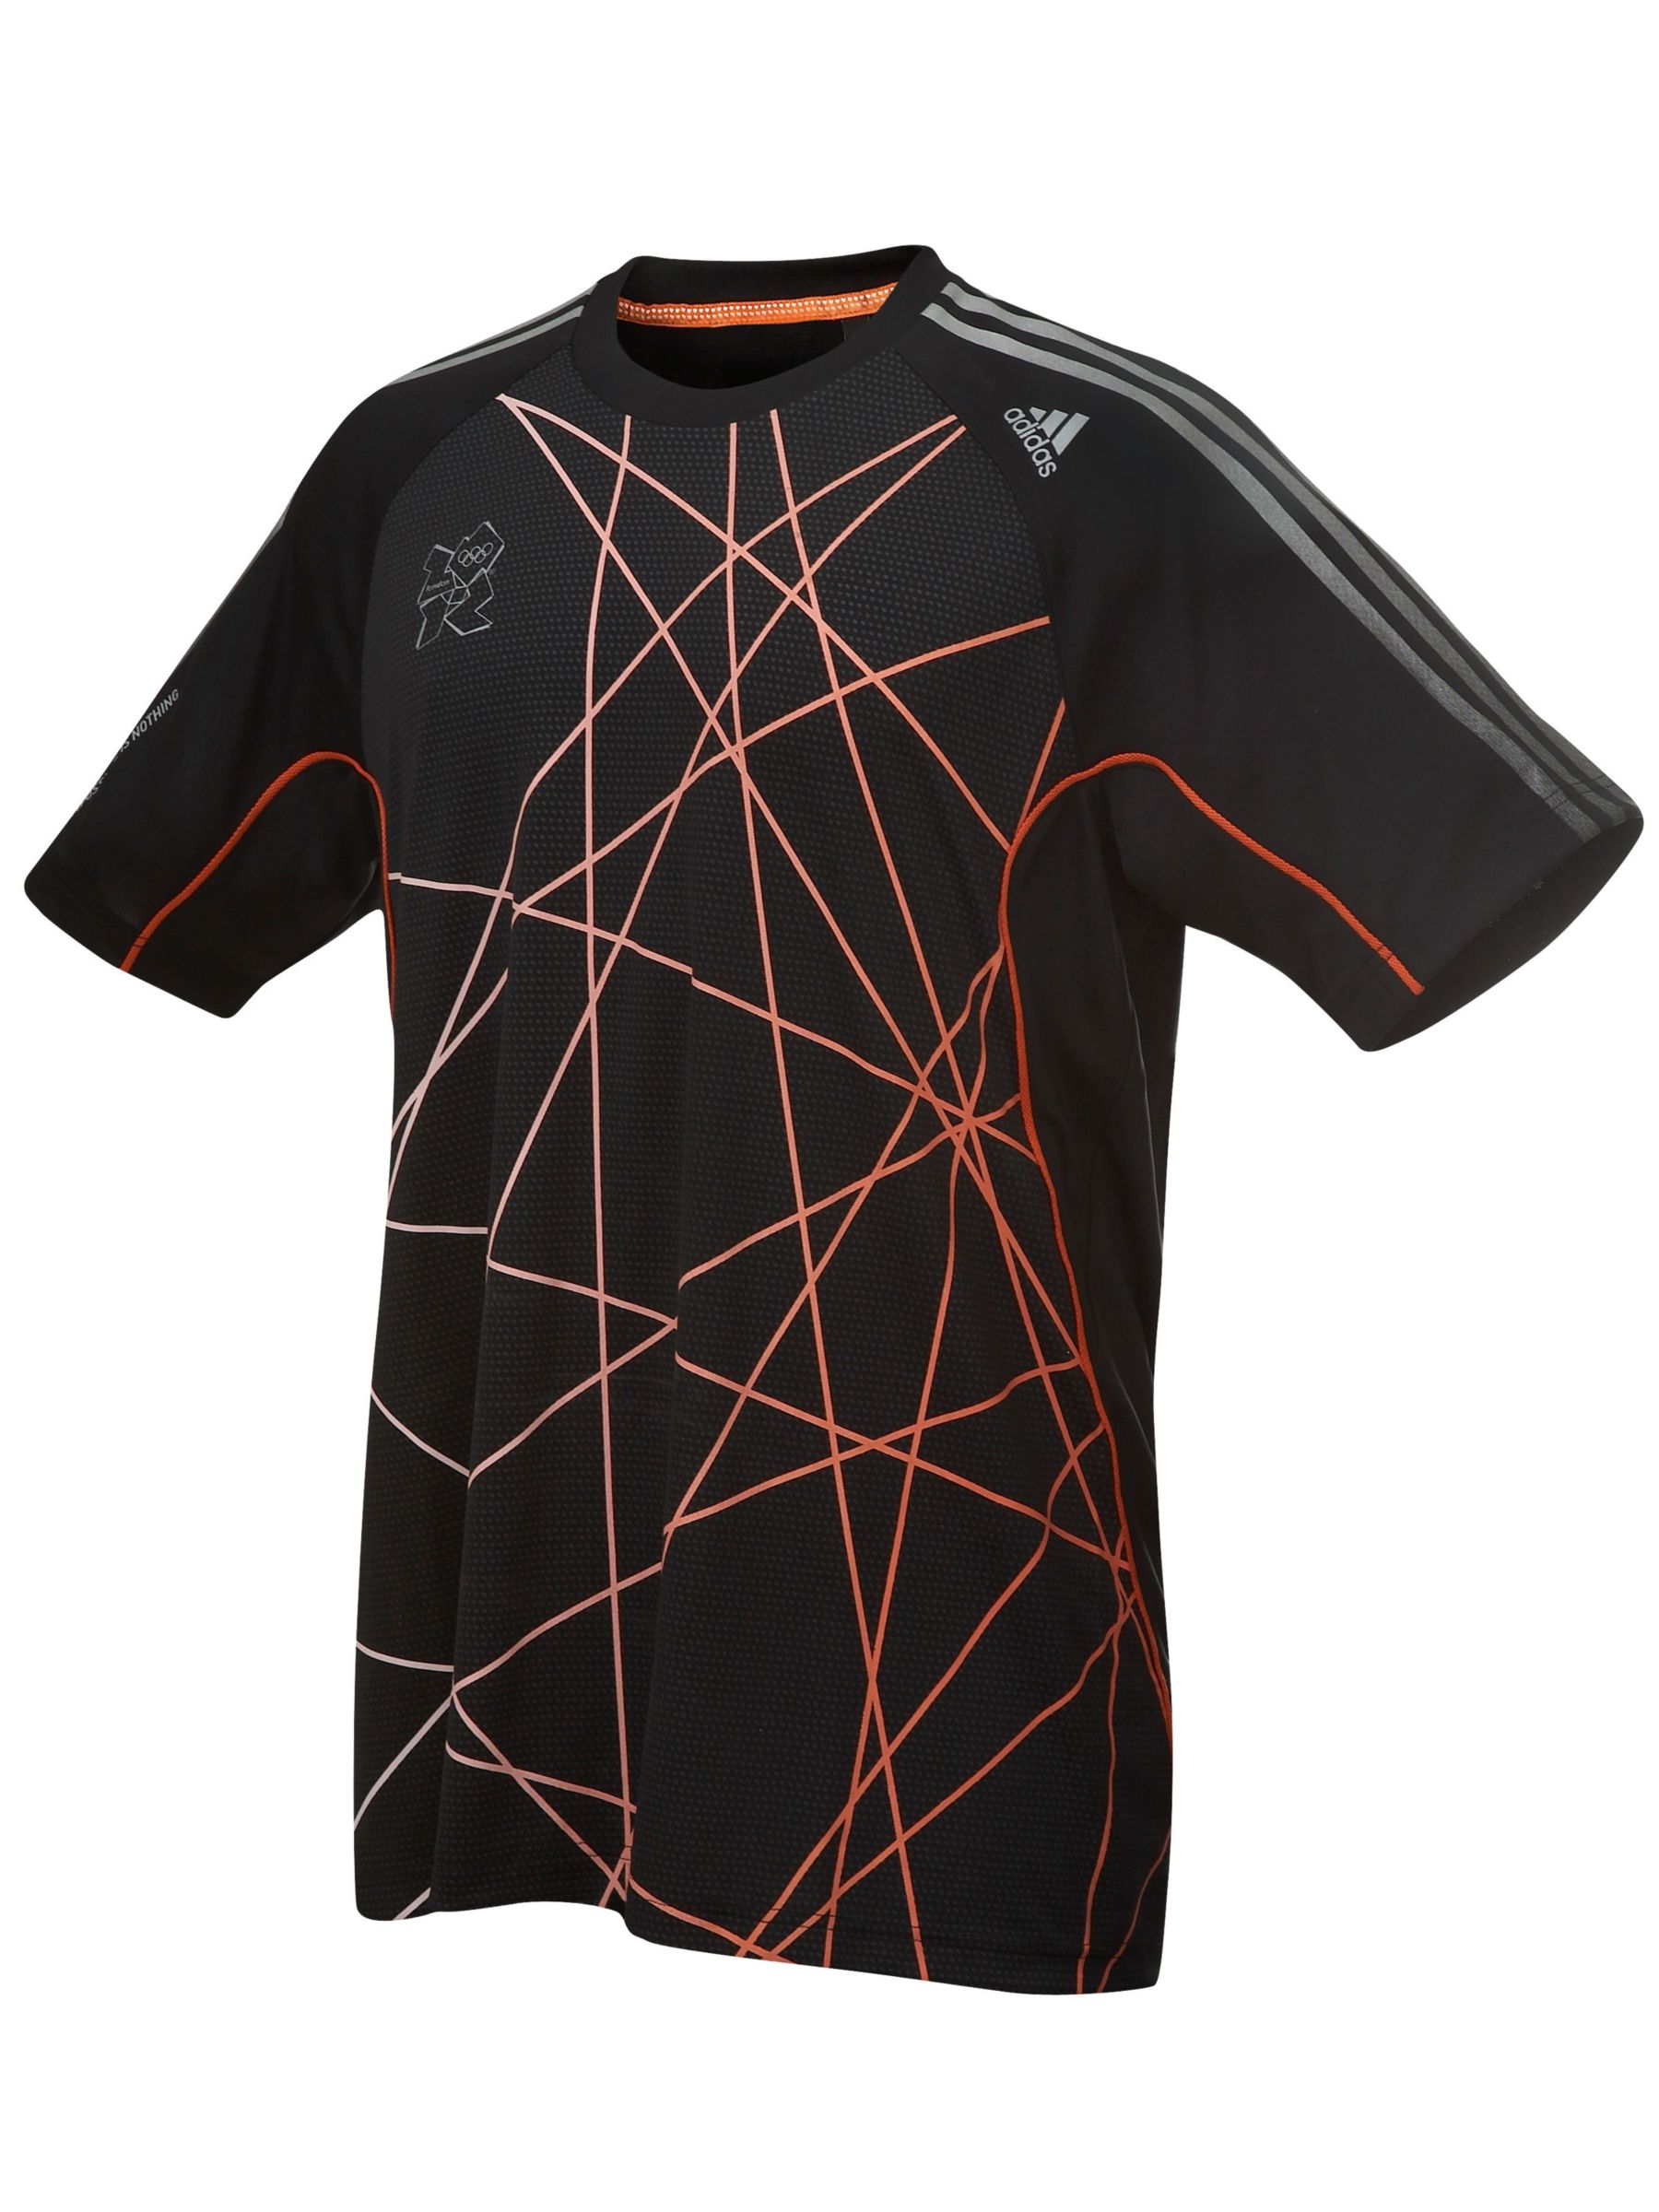 Adidas Team 2012 Graphic T-Shirt, Black